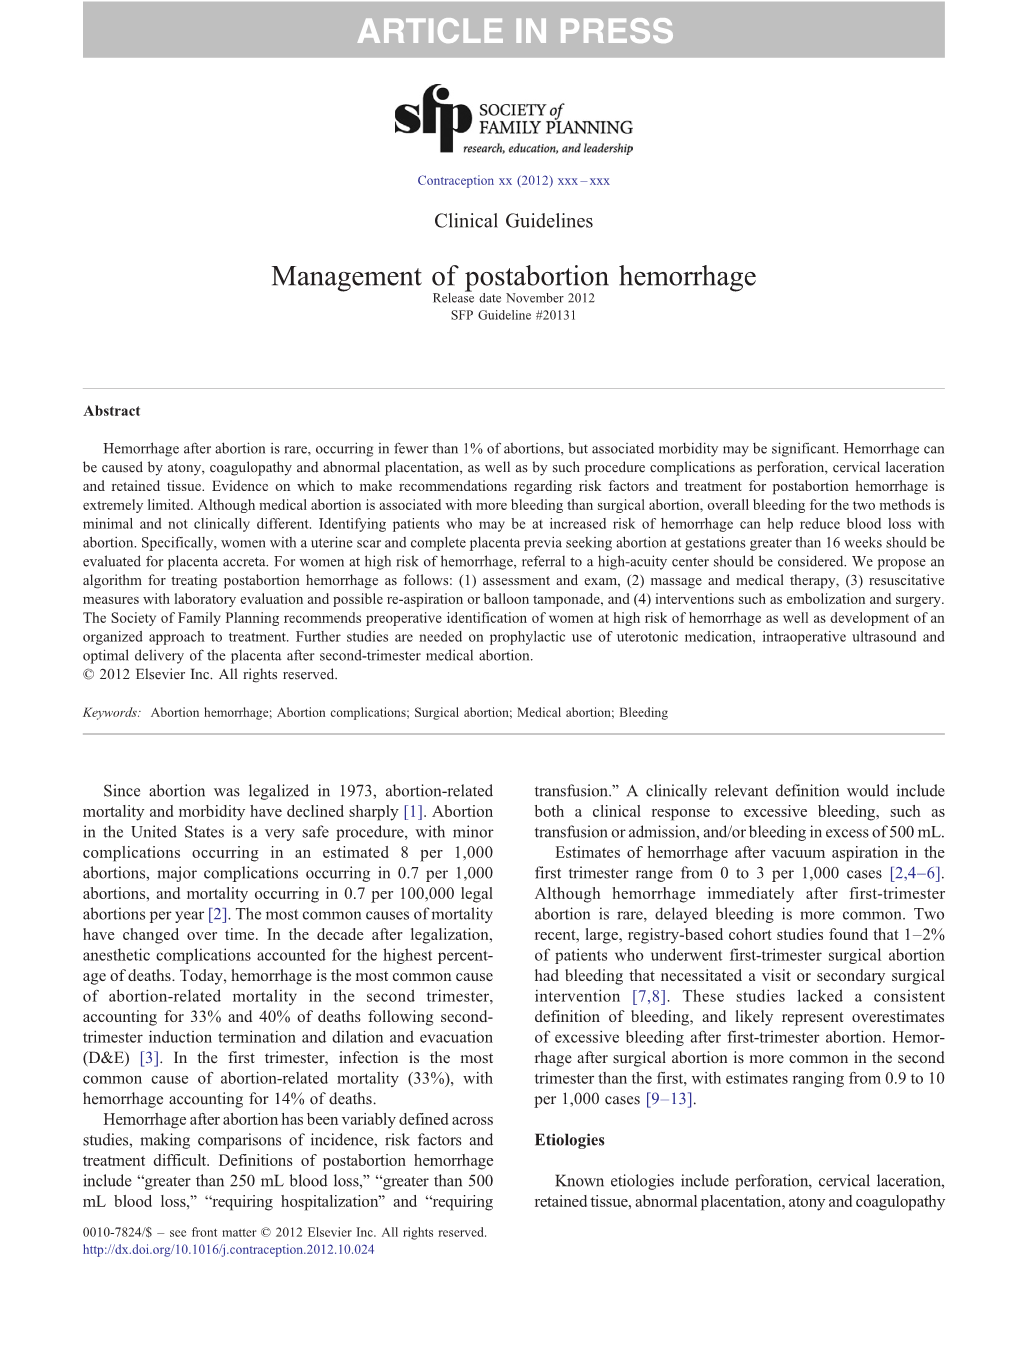 Management of Postabortion Hemorrhage Release Date November 2012 SFP Guideline #20131